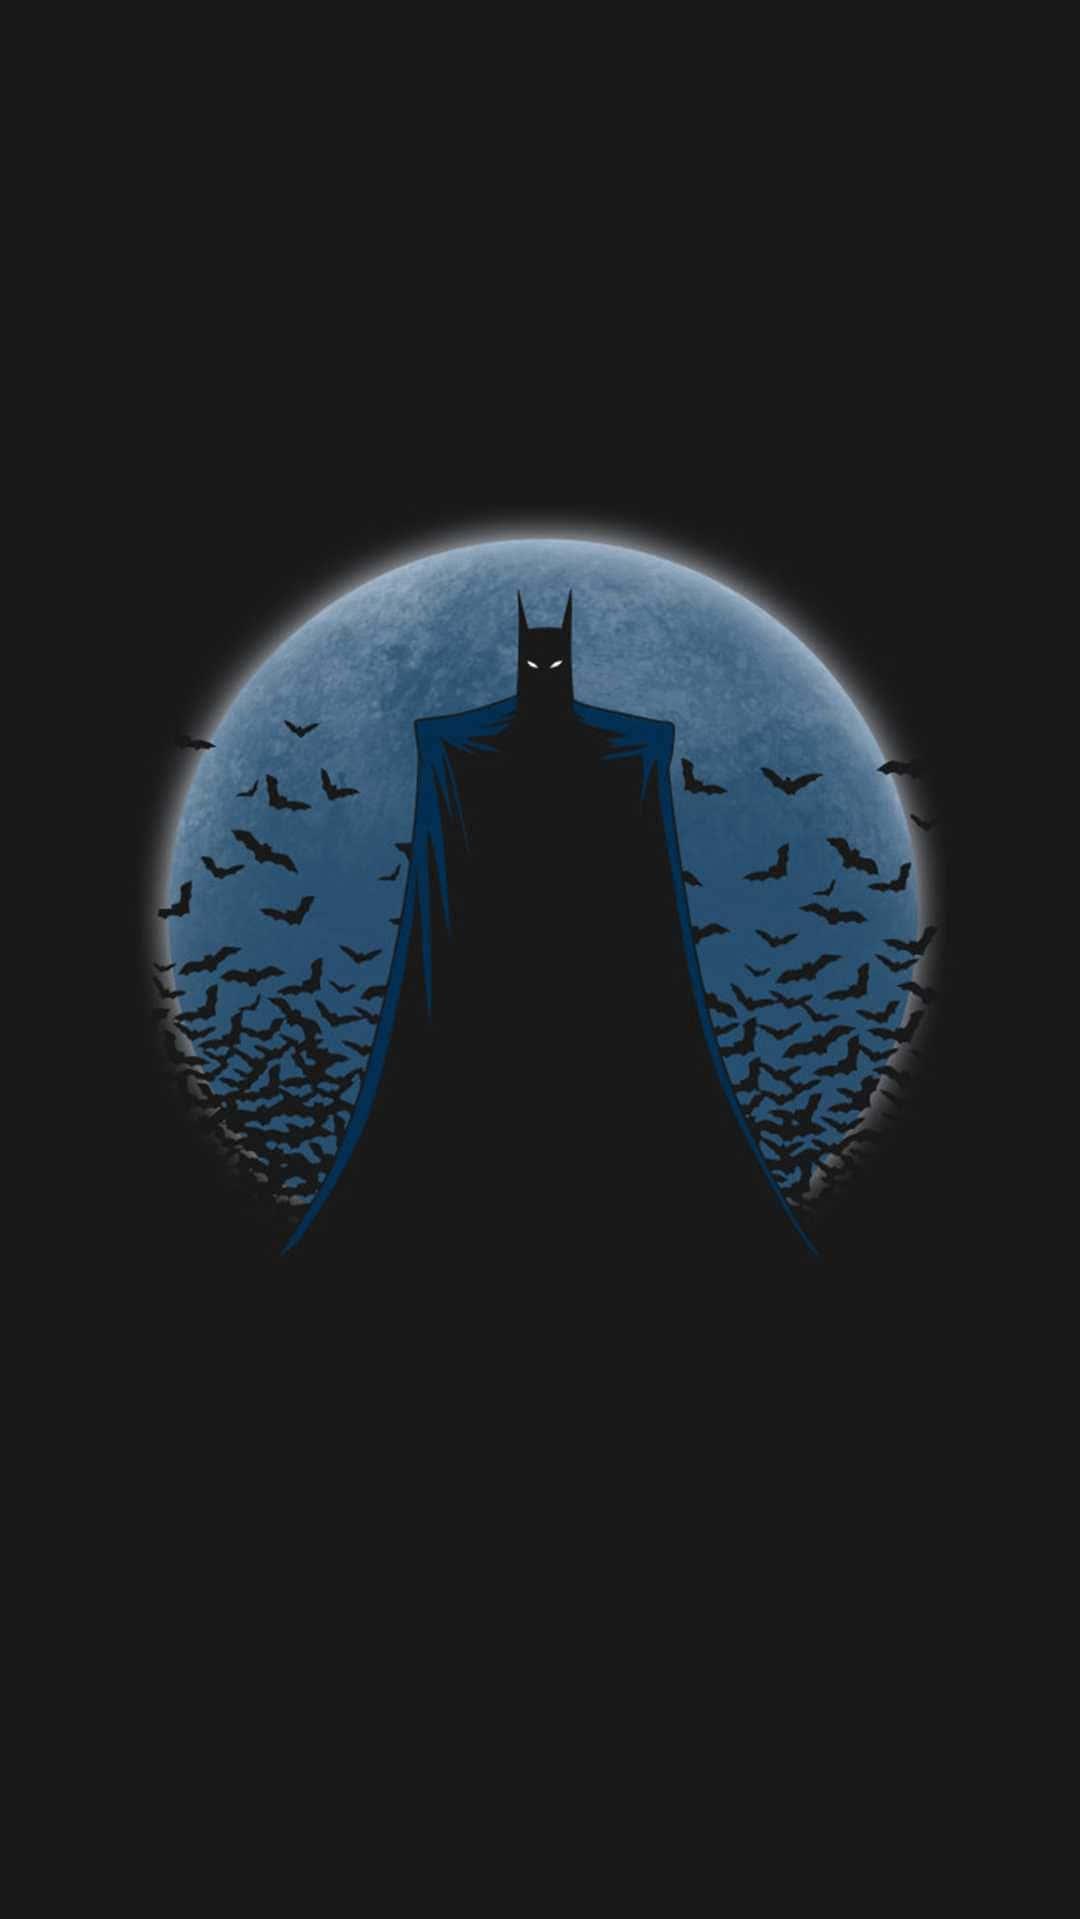 Batman Aesthetic Against Full Moon Wallpaper